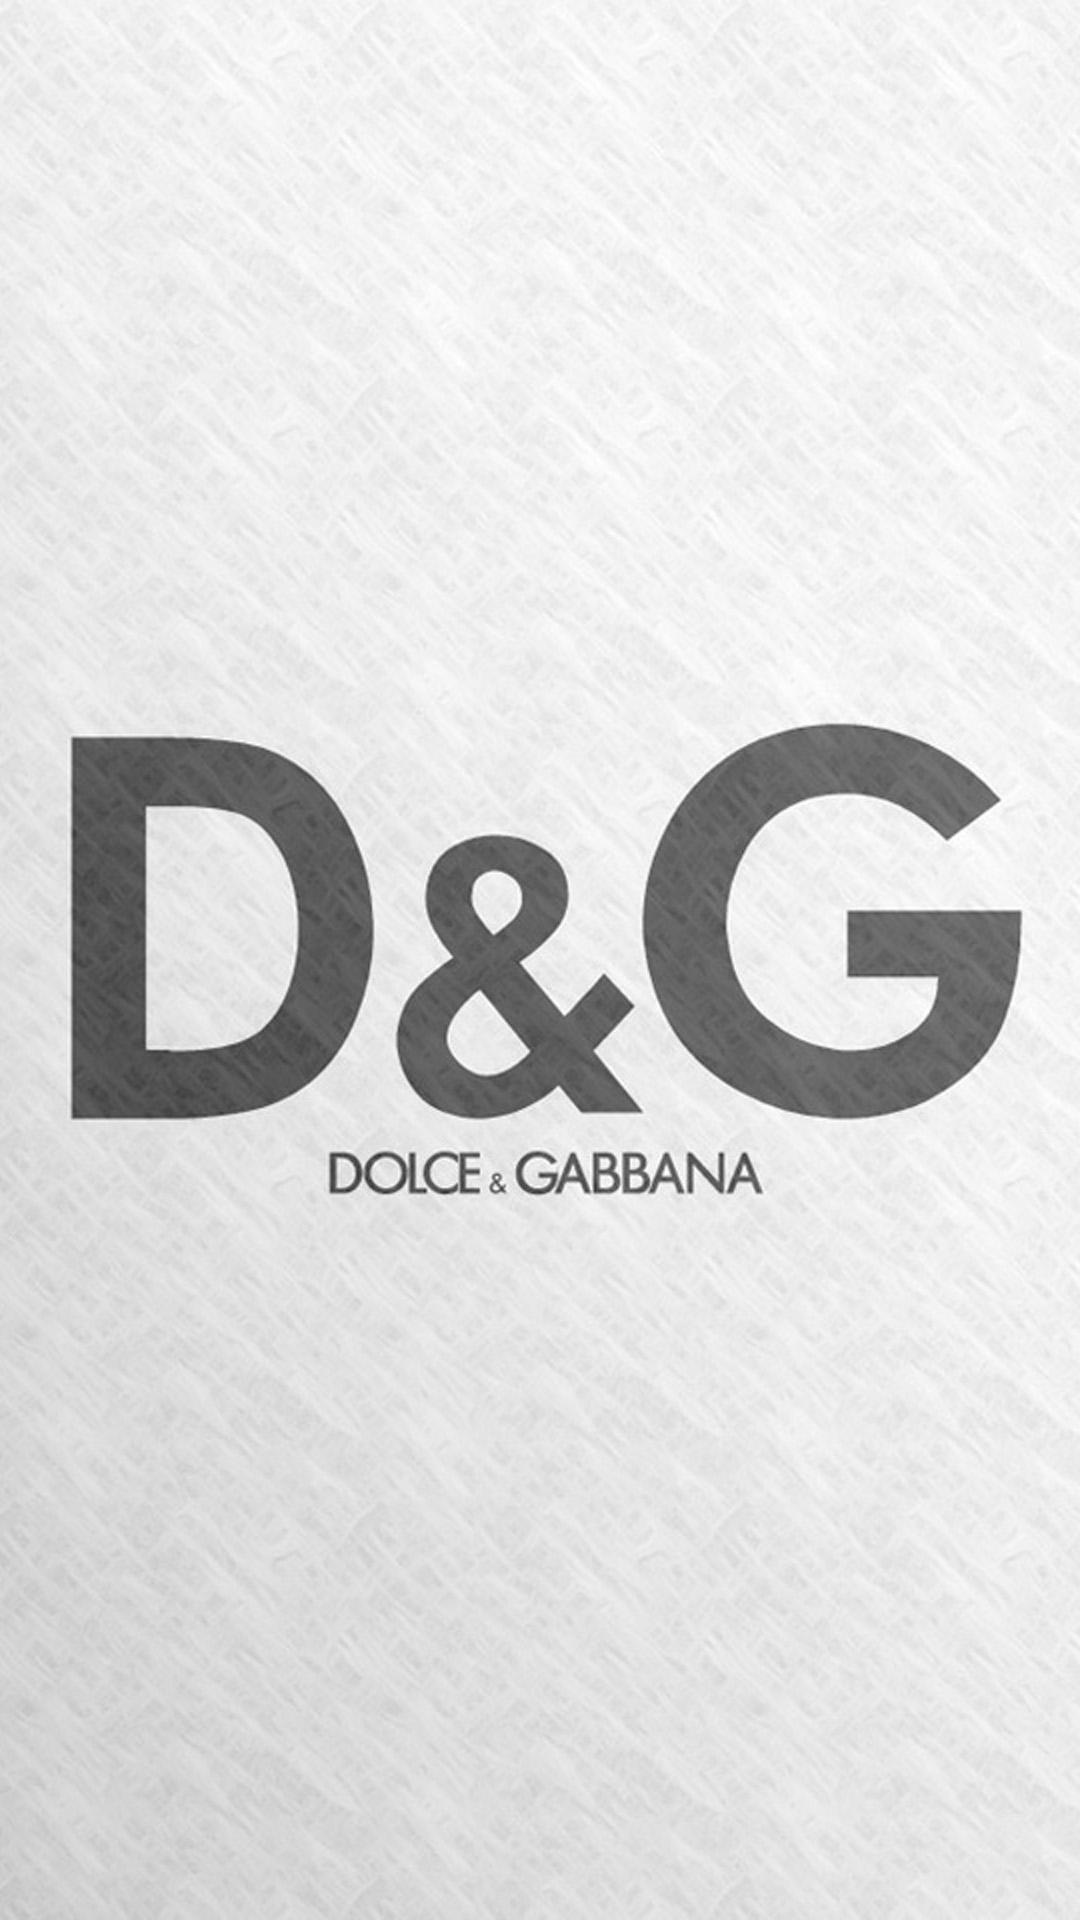 Знак дольче габбана. Dolce Gabbana бренд. Dolce Gabbana логотип. Фирменный знак Дольче Габбана. DG бренд одежды.